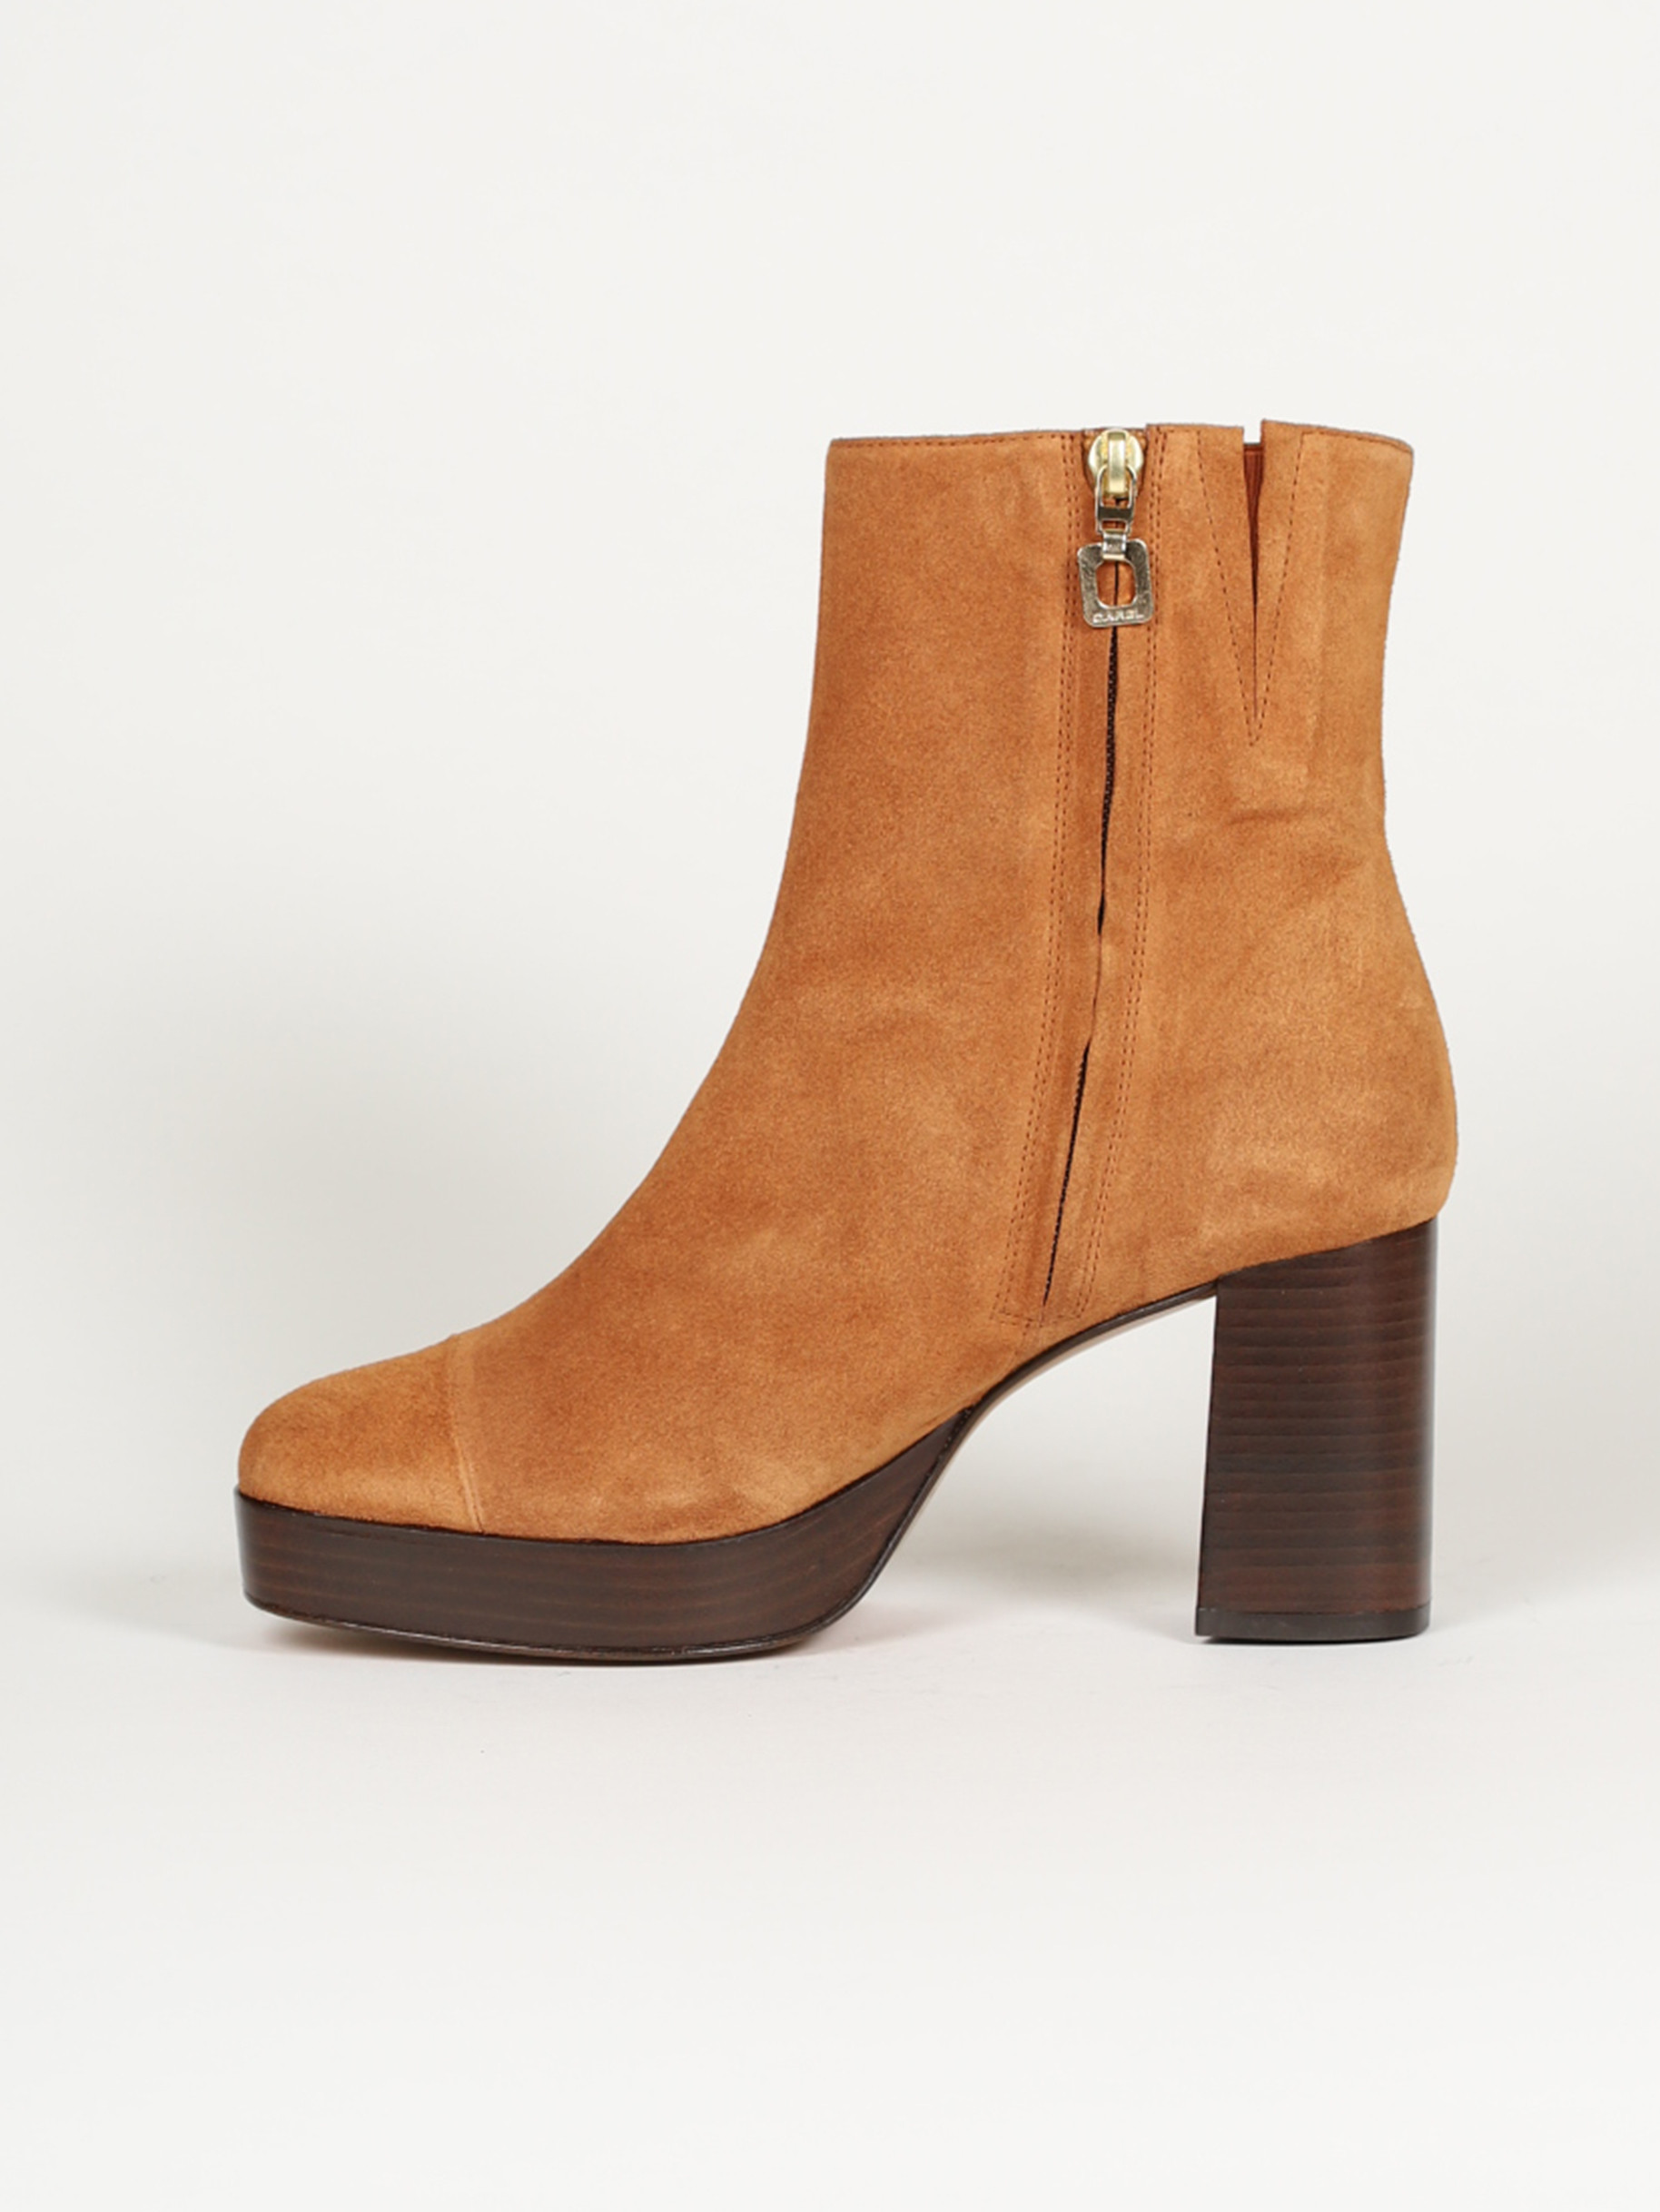 Velvet camel leather ankle boots